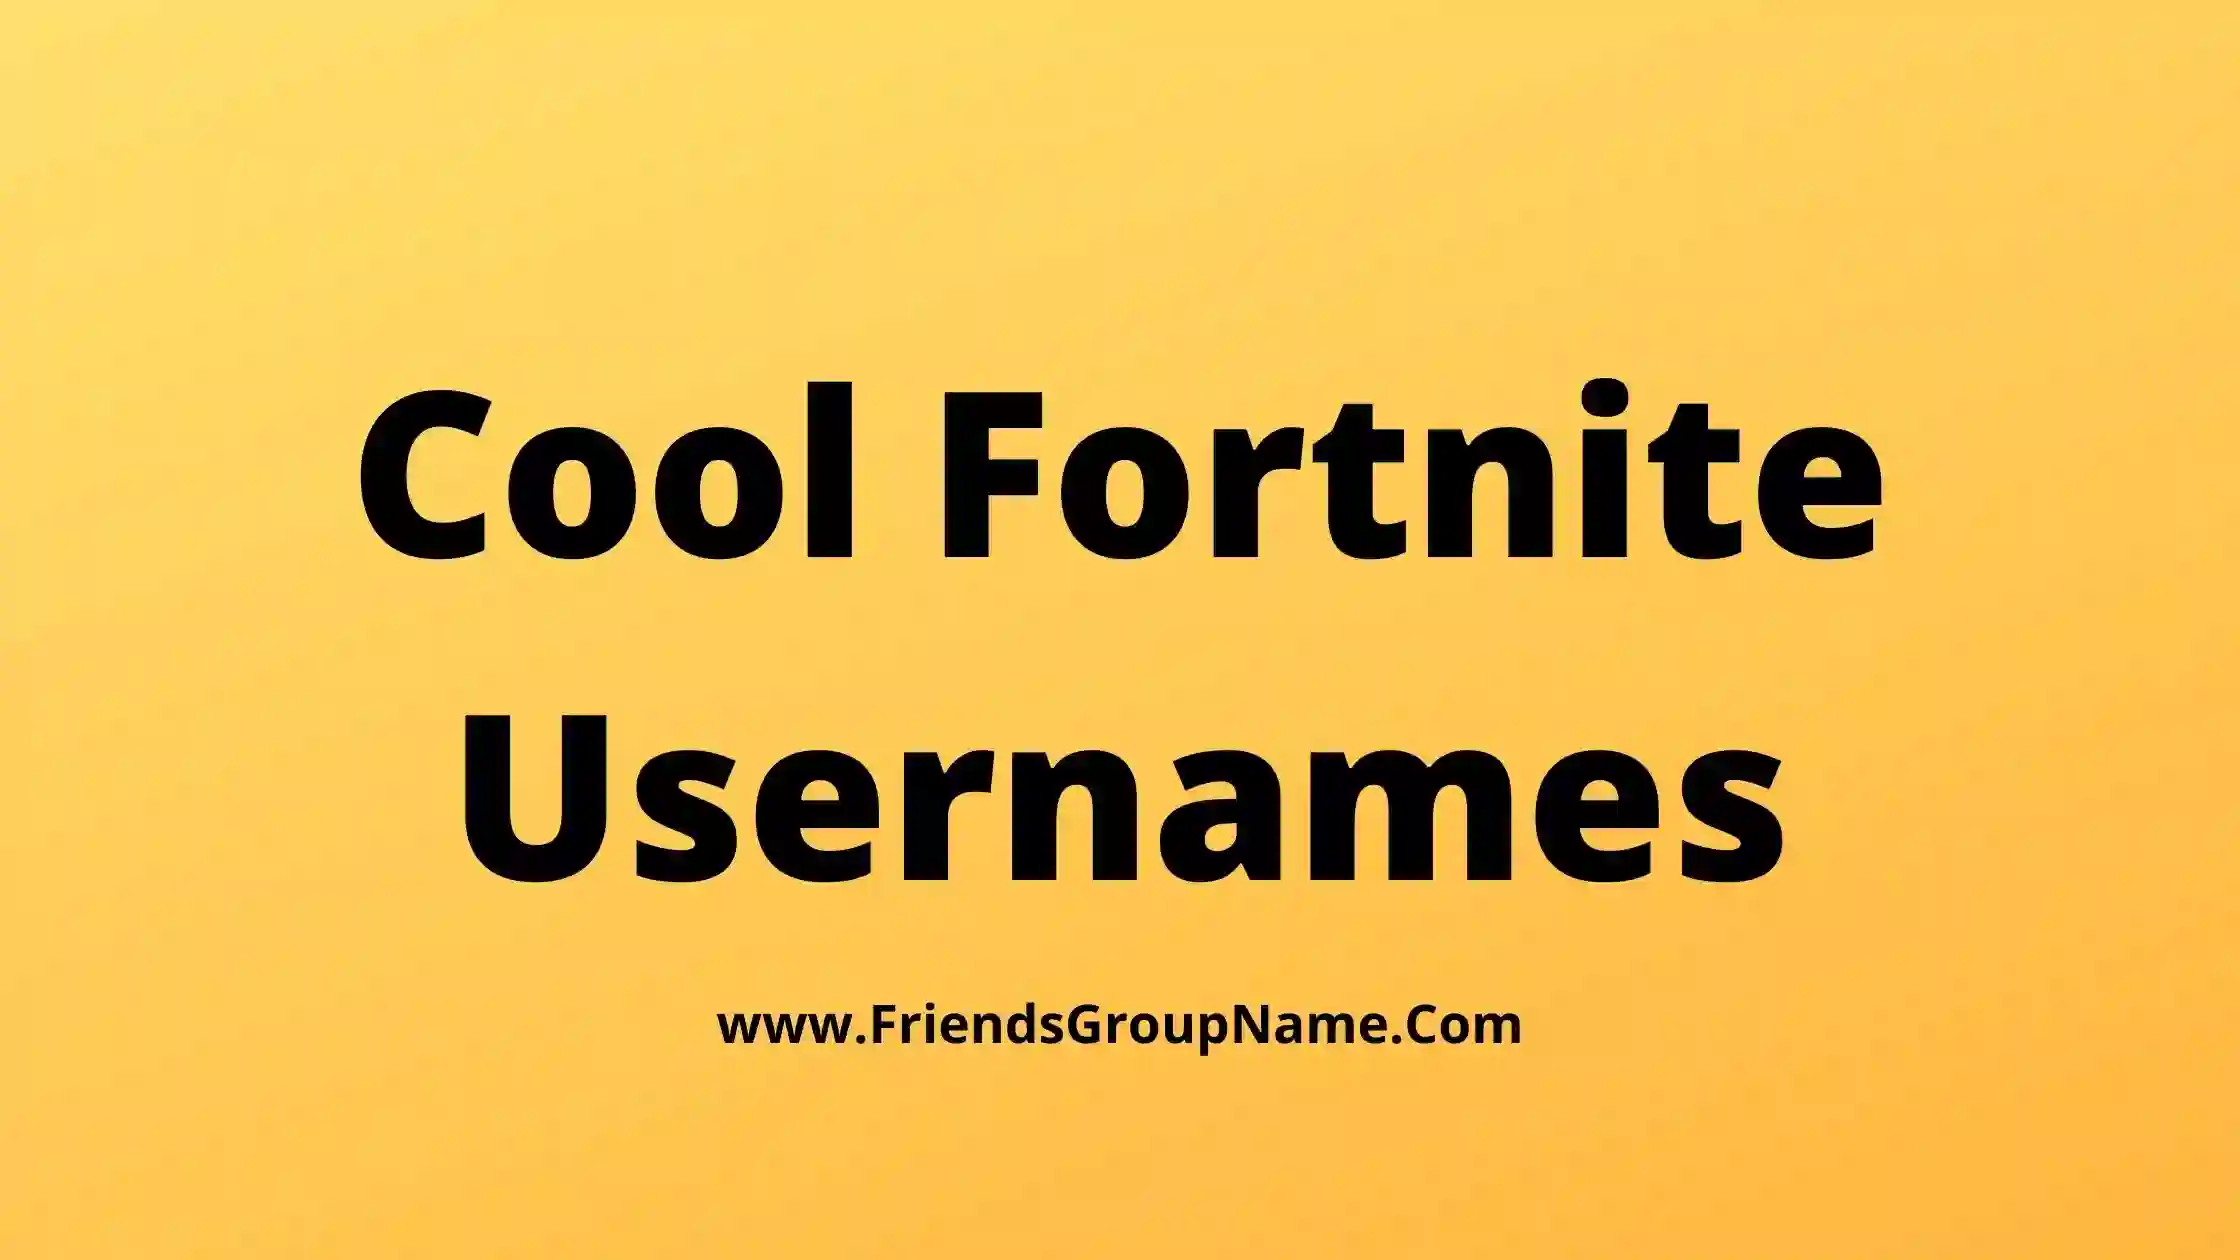 Cool Fortnite Usernames